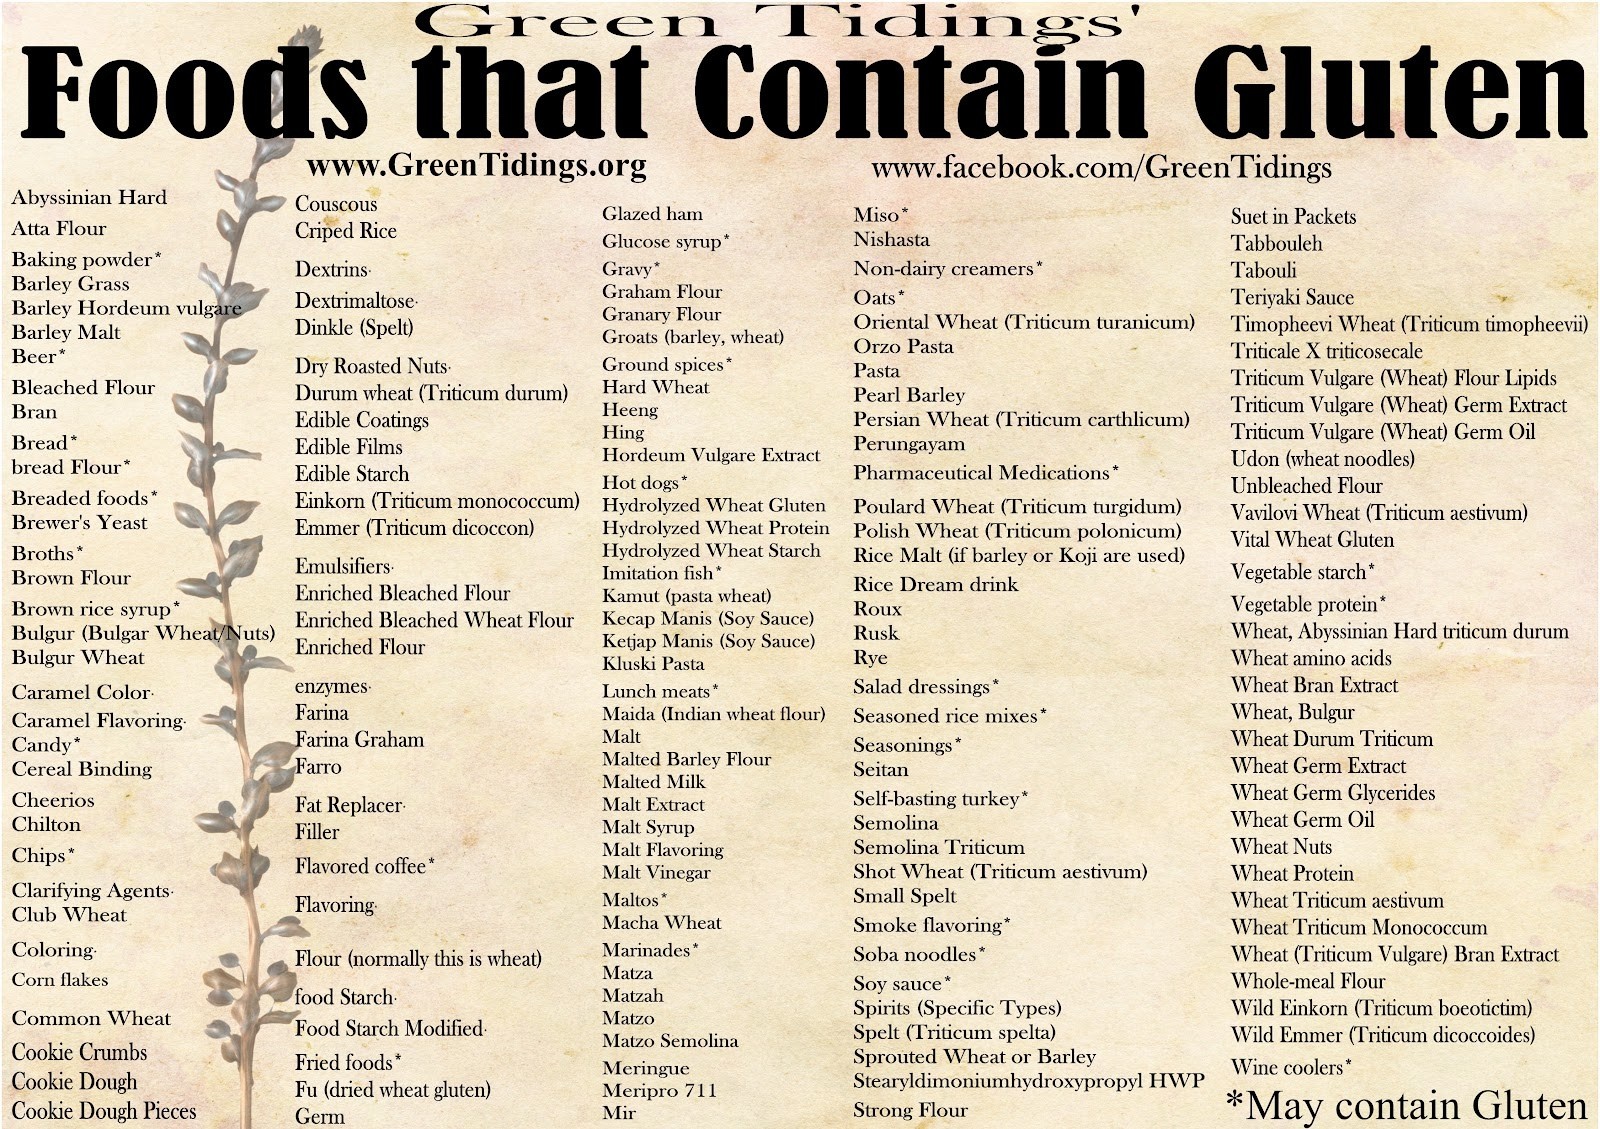 List Of Gluten Free Foods Printable